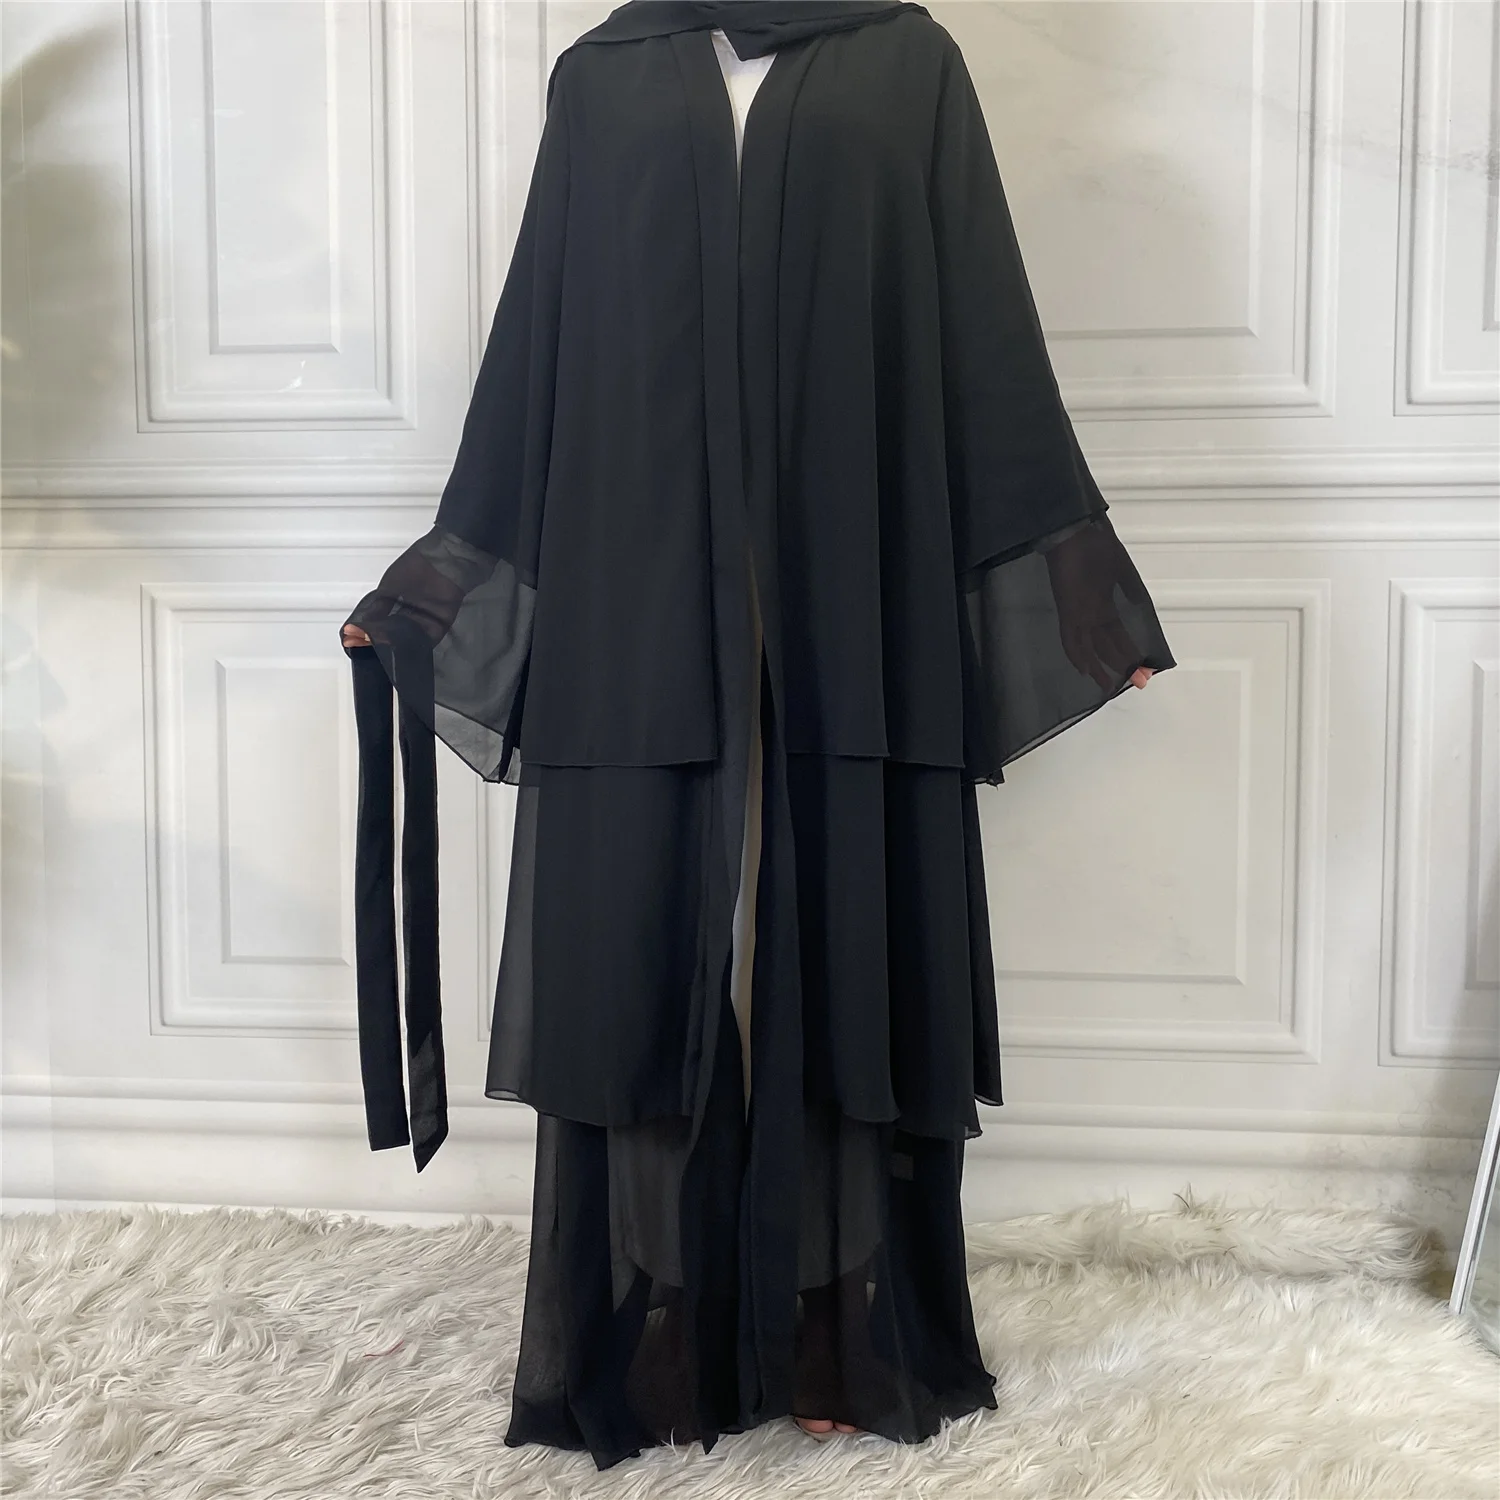 Kimono Coat Party Dresses Kpytomoa Plus Size Women Clothing Outer Banks Caftan Marocain Hijab Muslim Turkey Pakistani Abayas